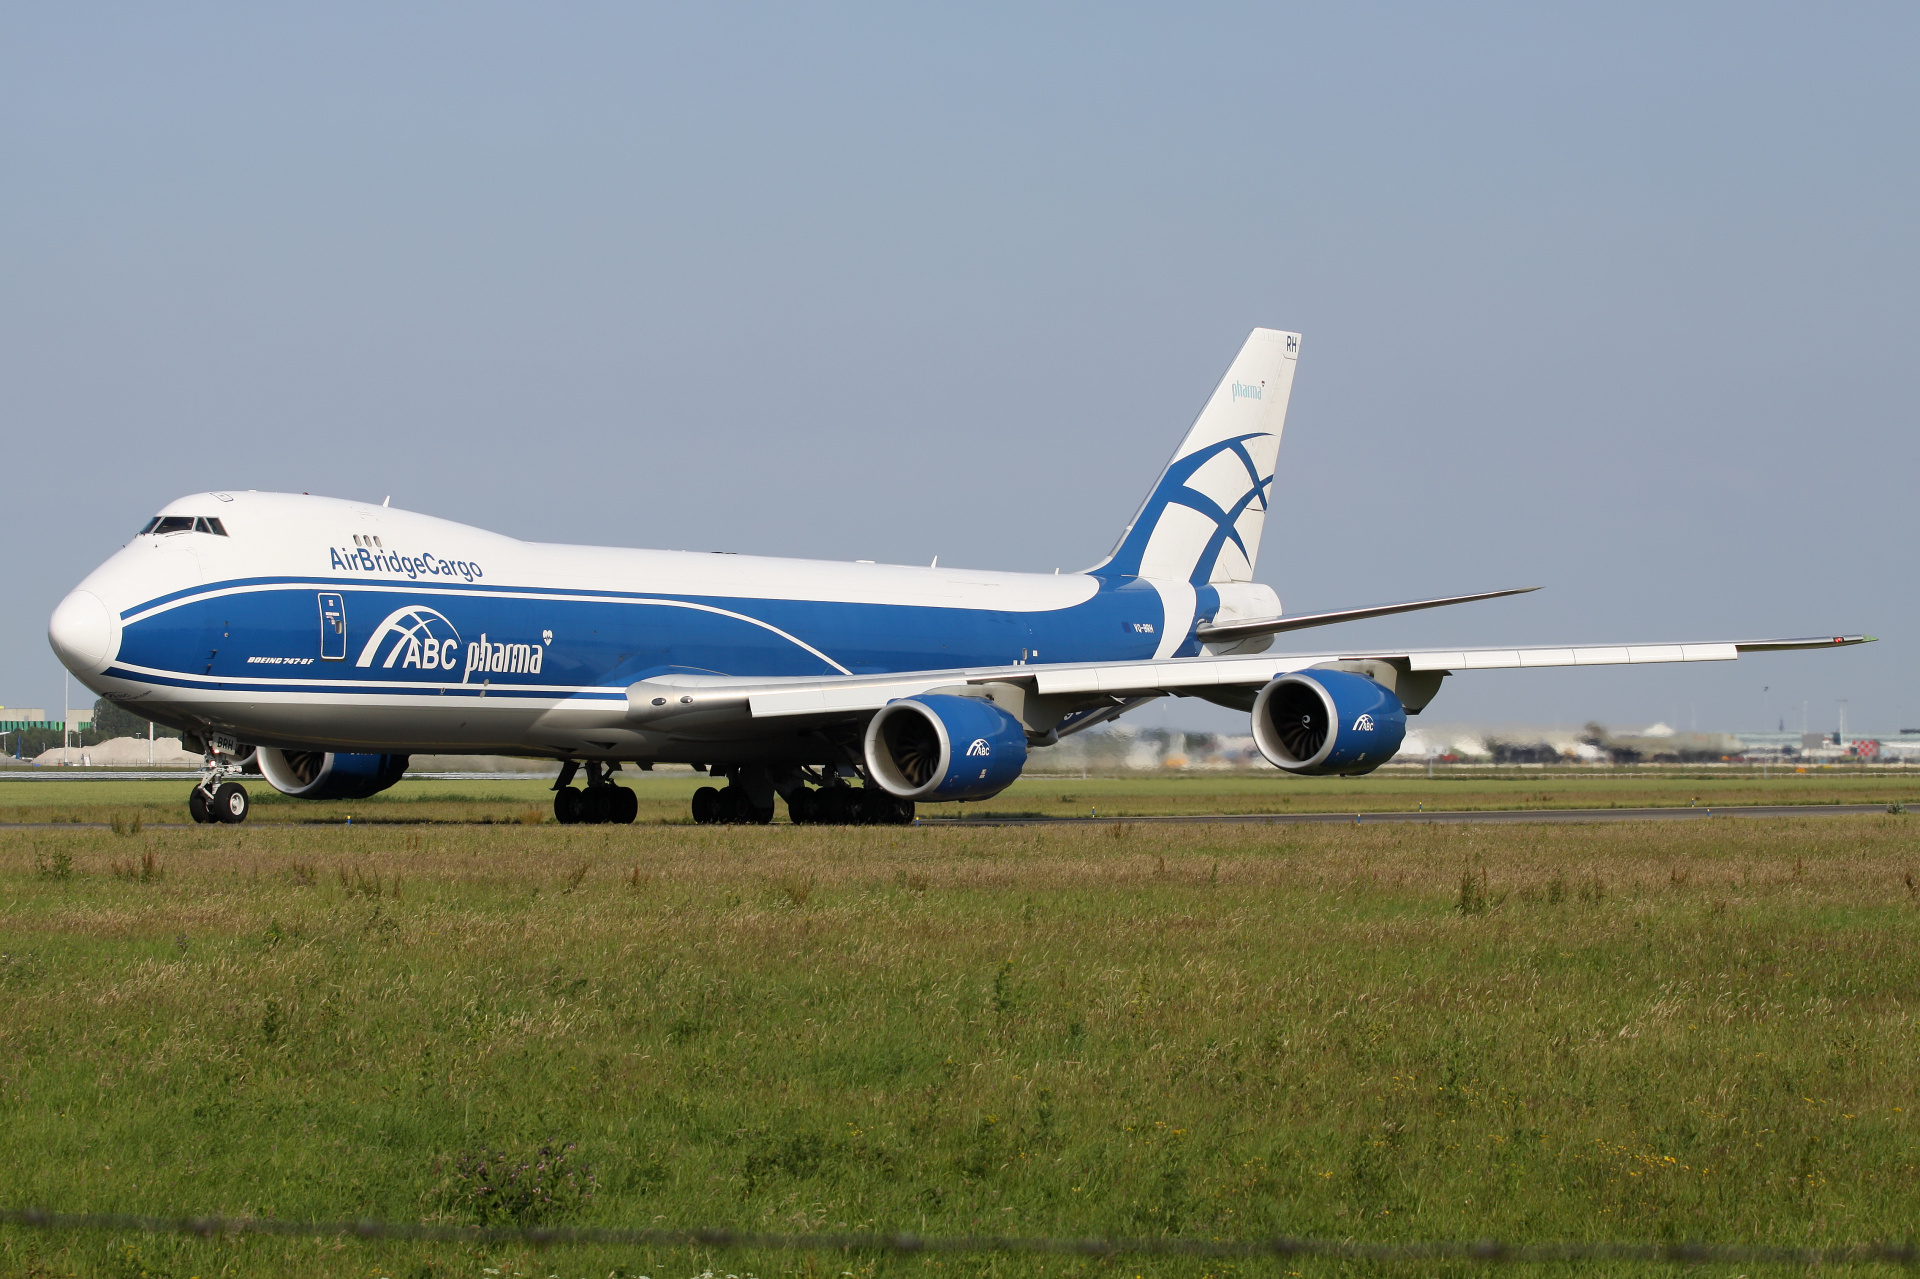 VQ-BRH (ABC Pharma livery) (Aircraft » Schiphol Spotting » Boeing 747-8F » AirBridgeCargo Airlines)